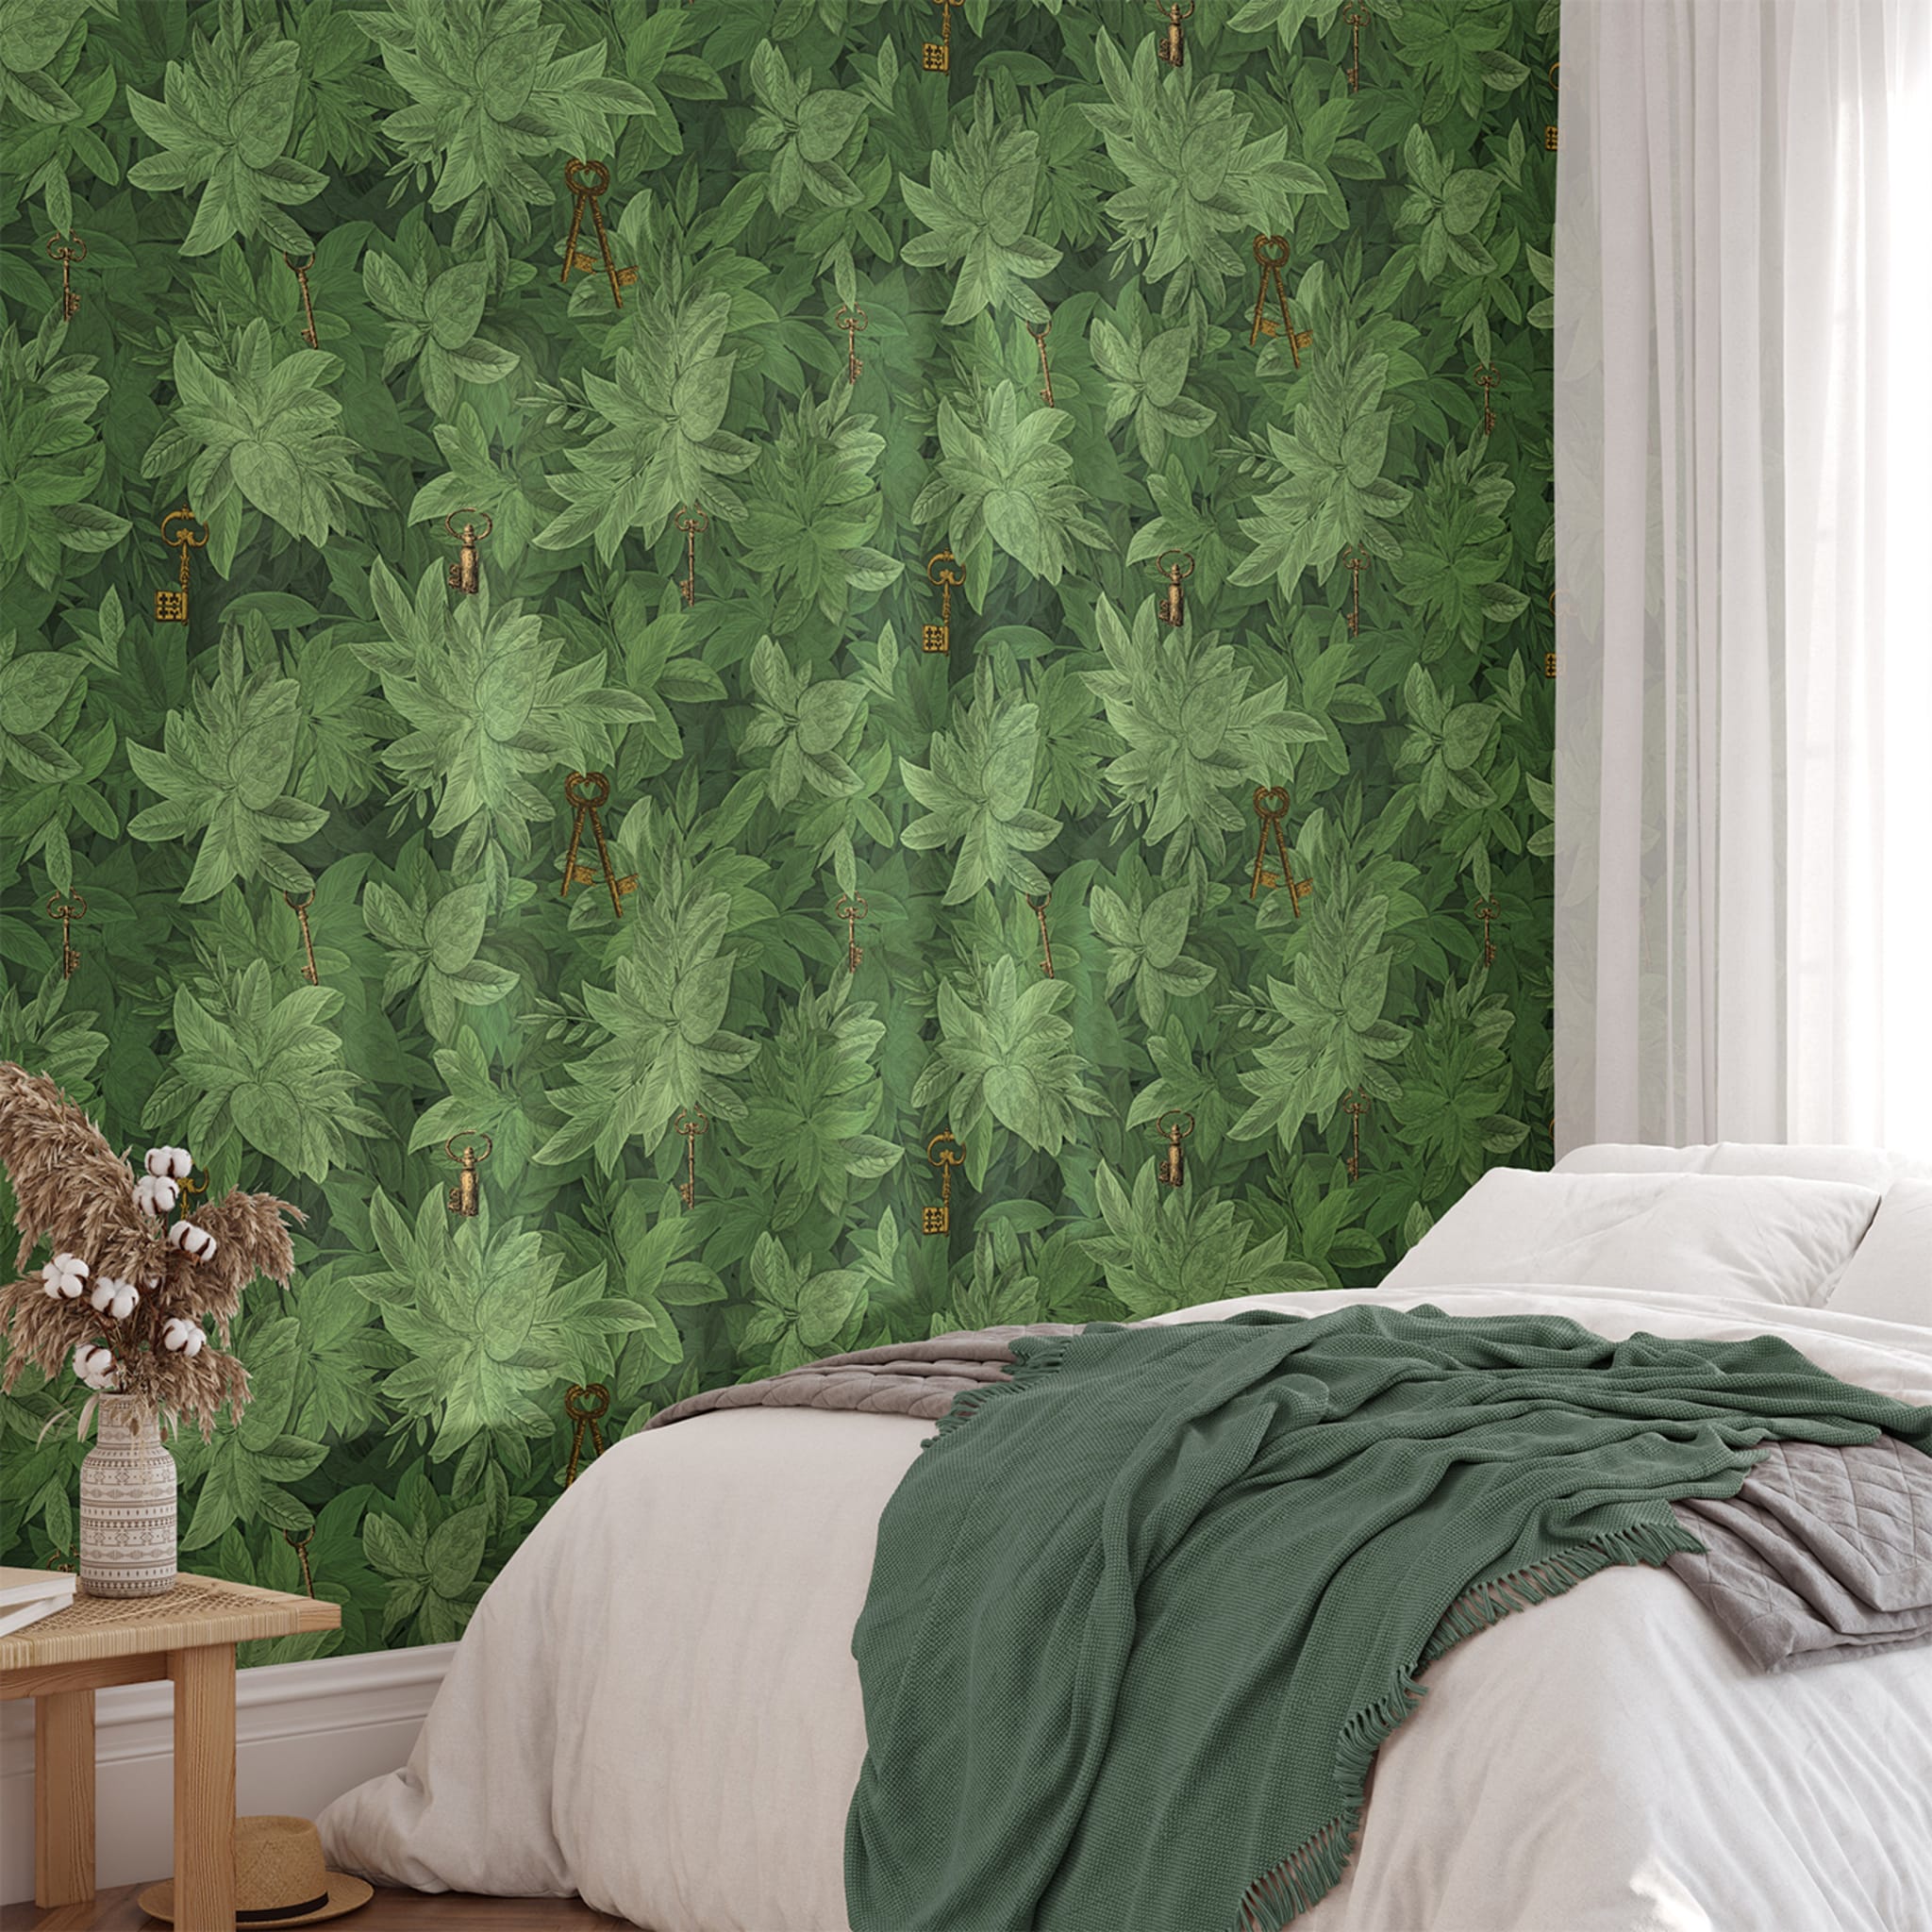 Green Ivy Leaves Wallpaper - Alternative view 2